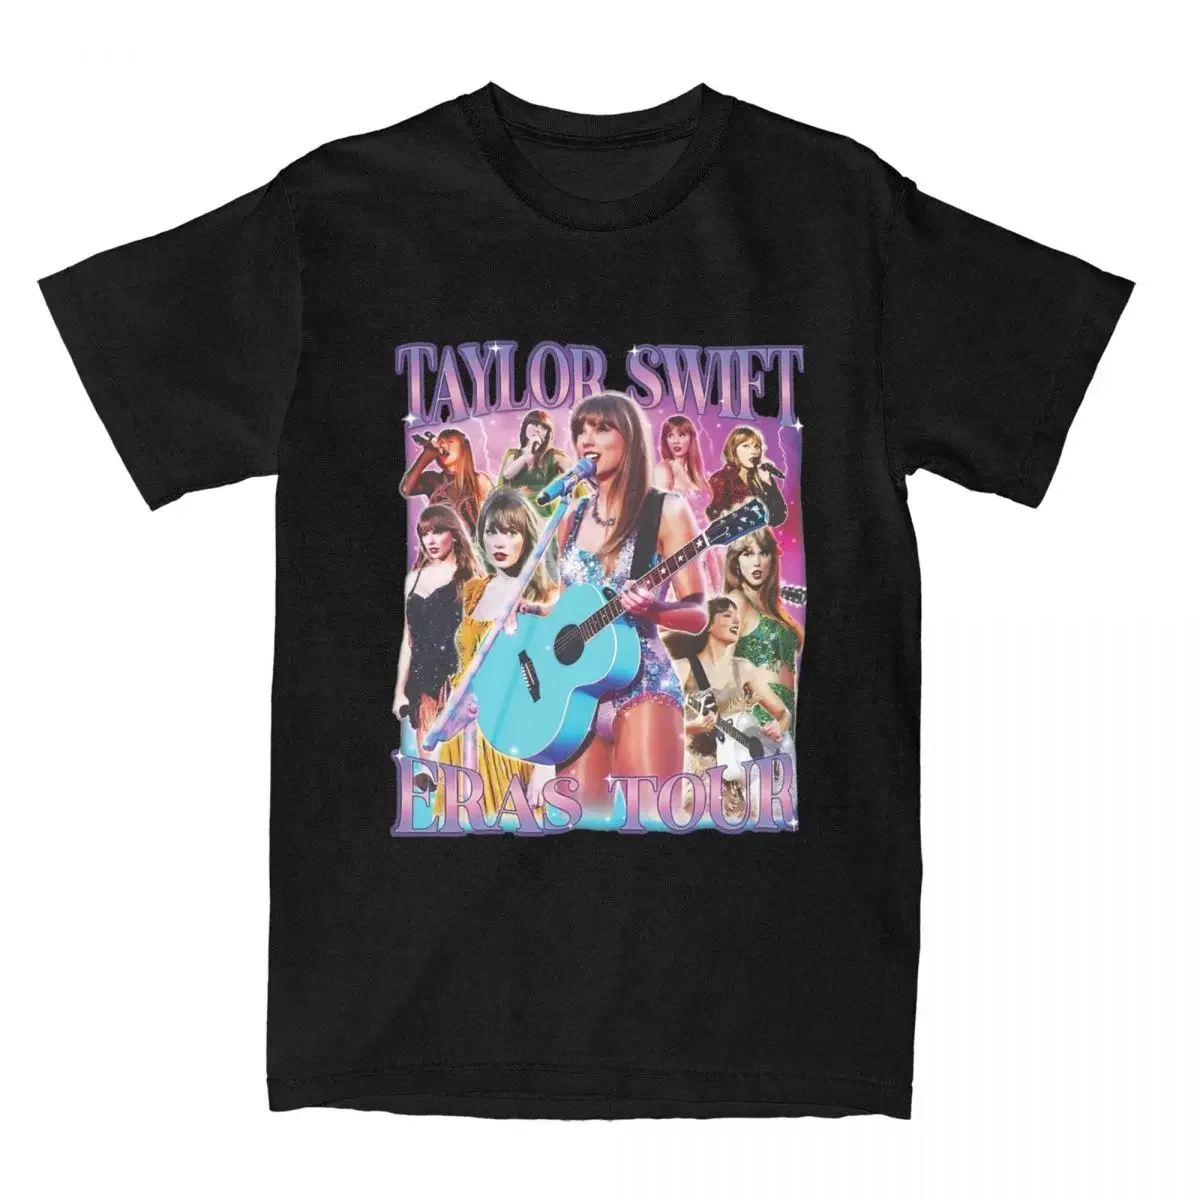 Concert Tour T-Shirt